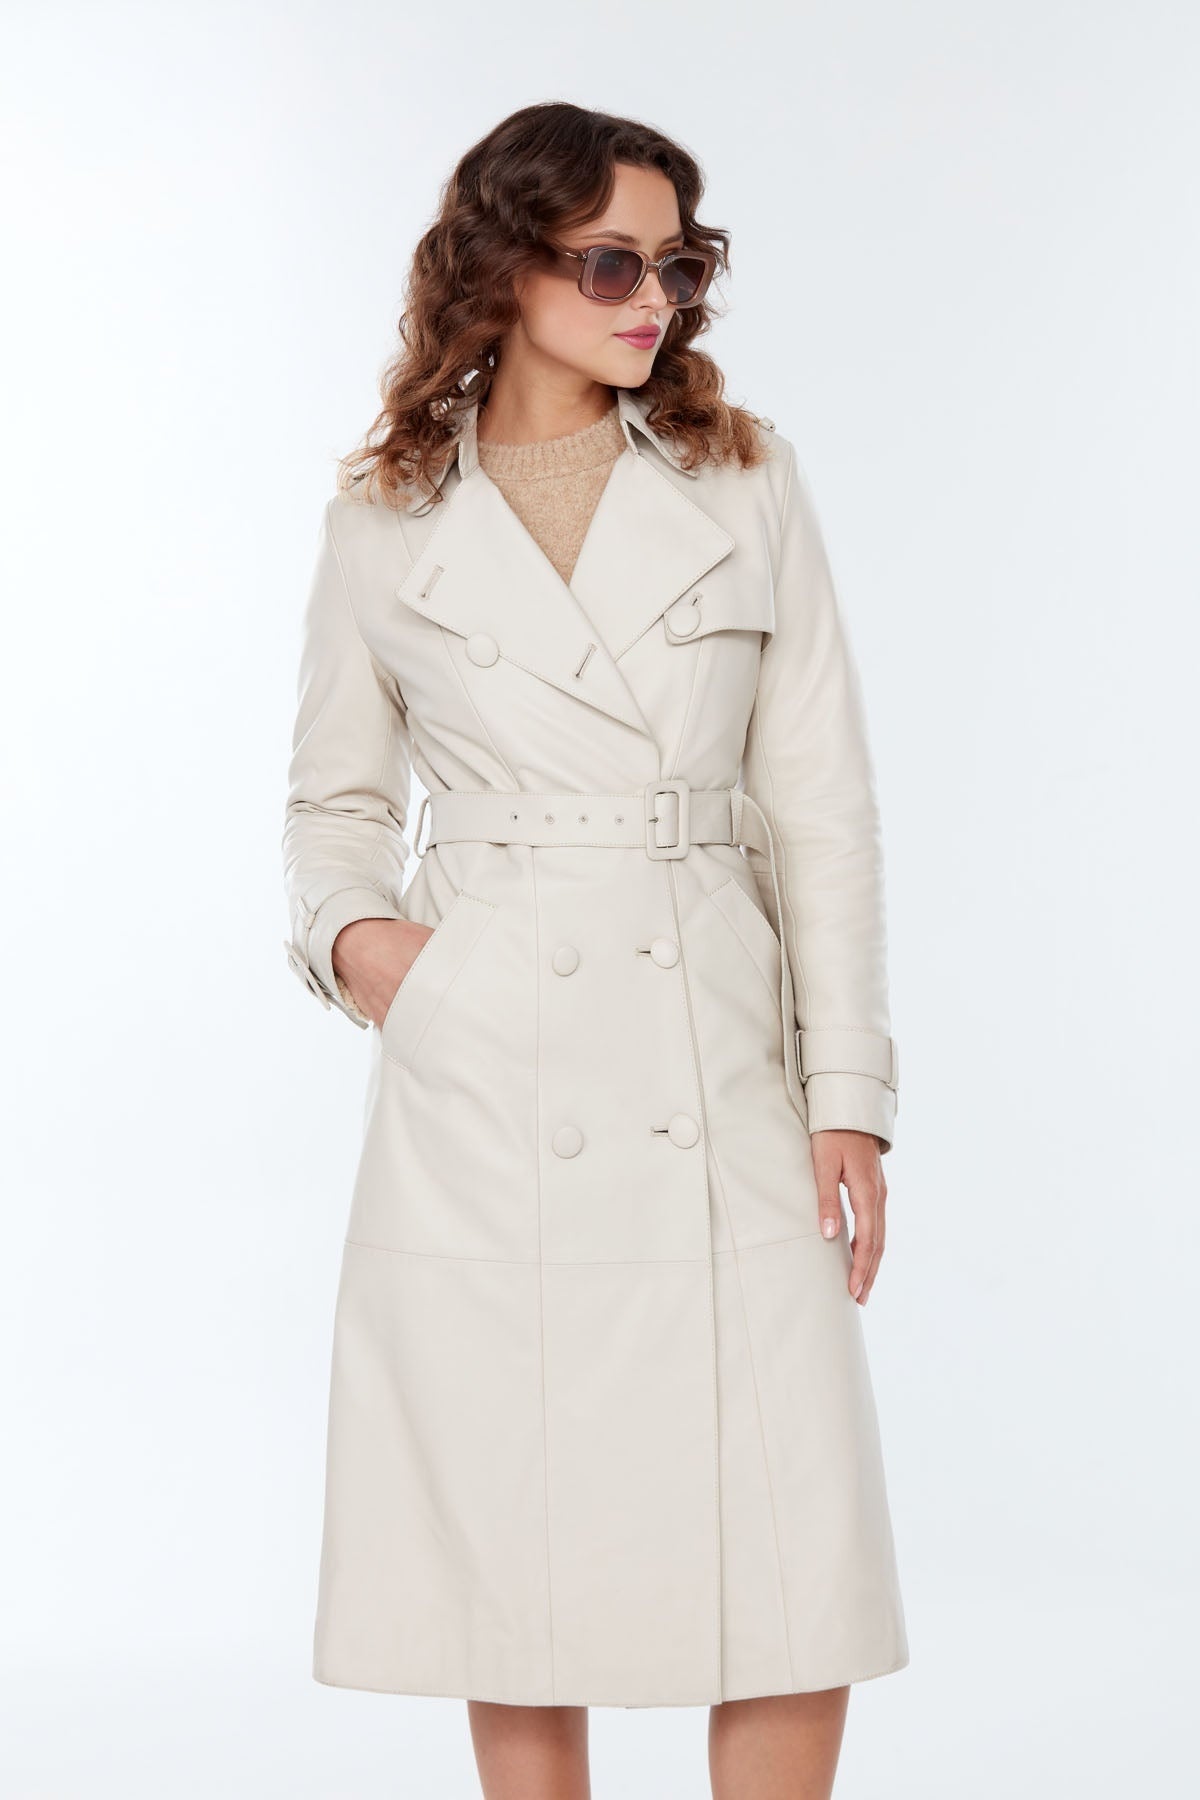 Fergie Women's Beige Leather Trench Coat